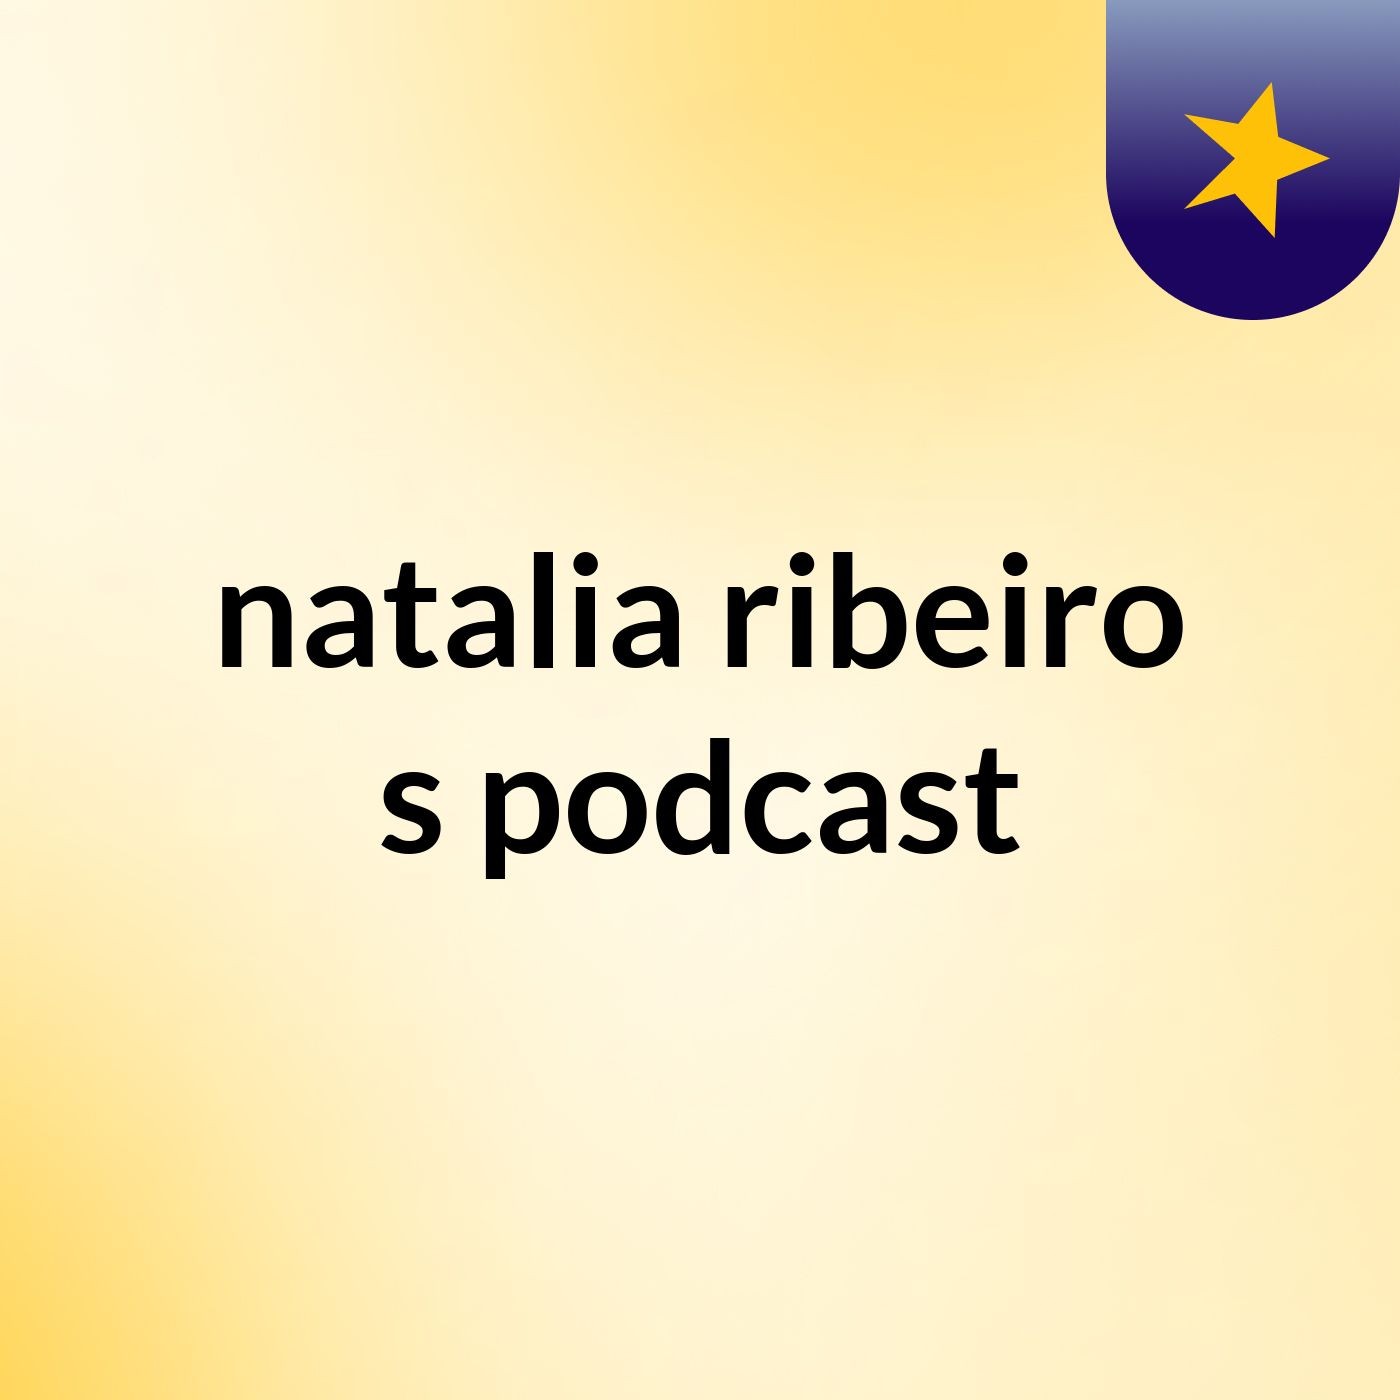 natalia ribeiro's podcast